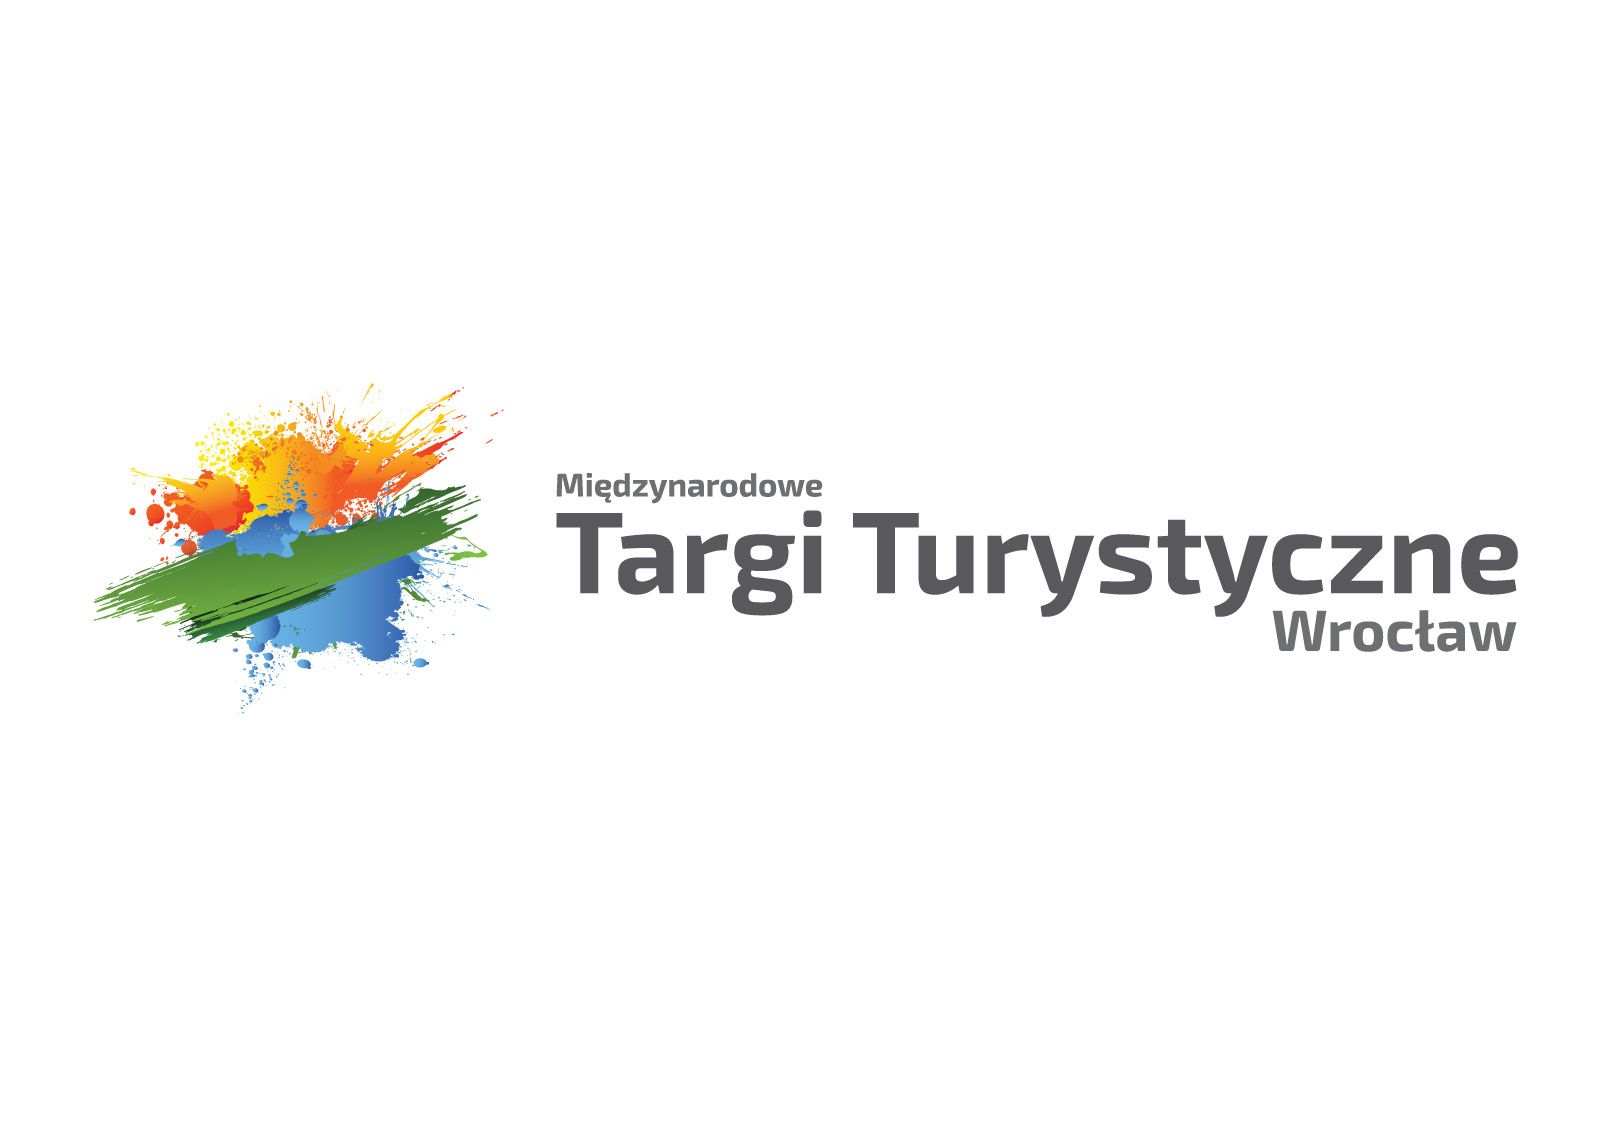 International Tourism Fair in Wrocław - 26-28 FEBRUARY 2016 – main image